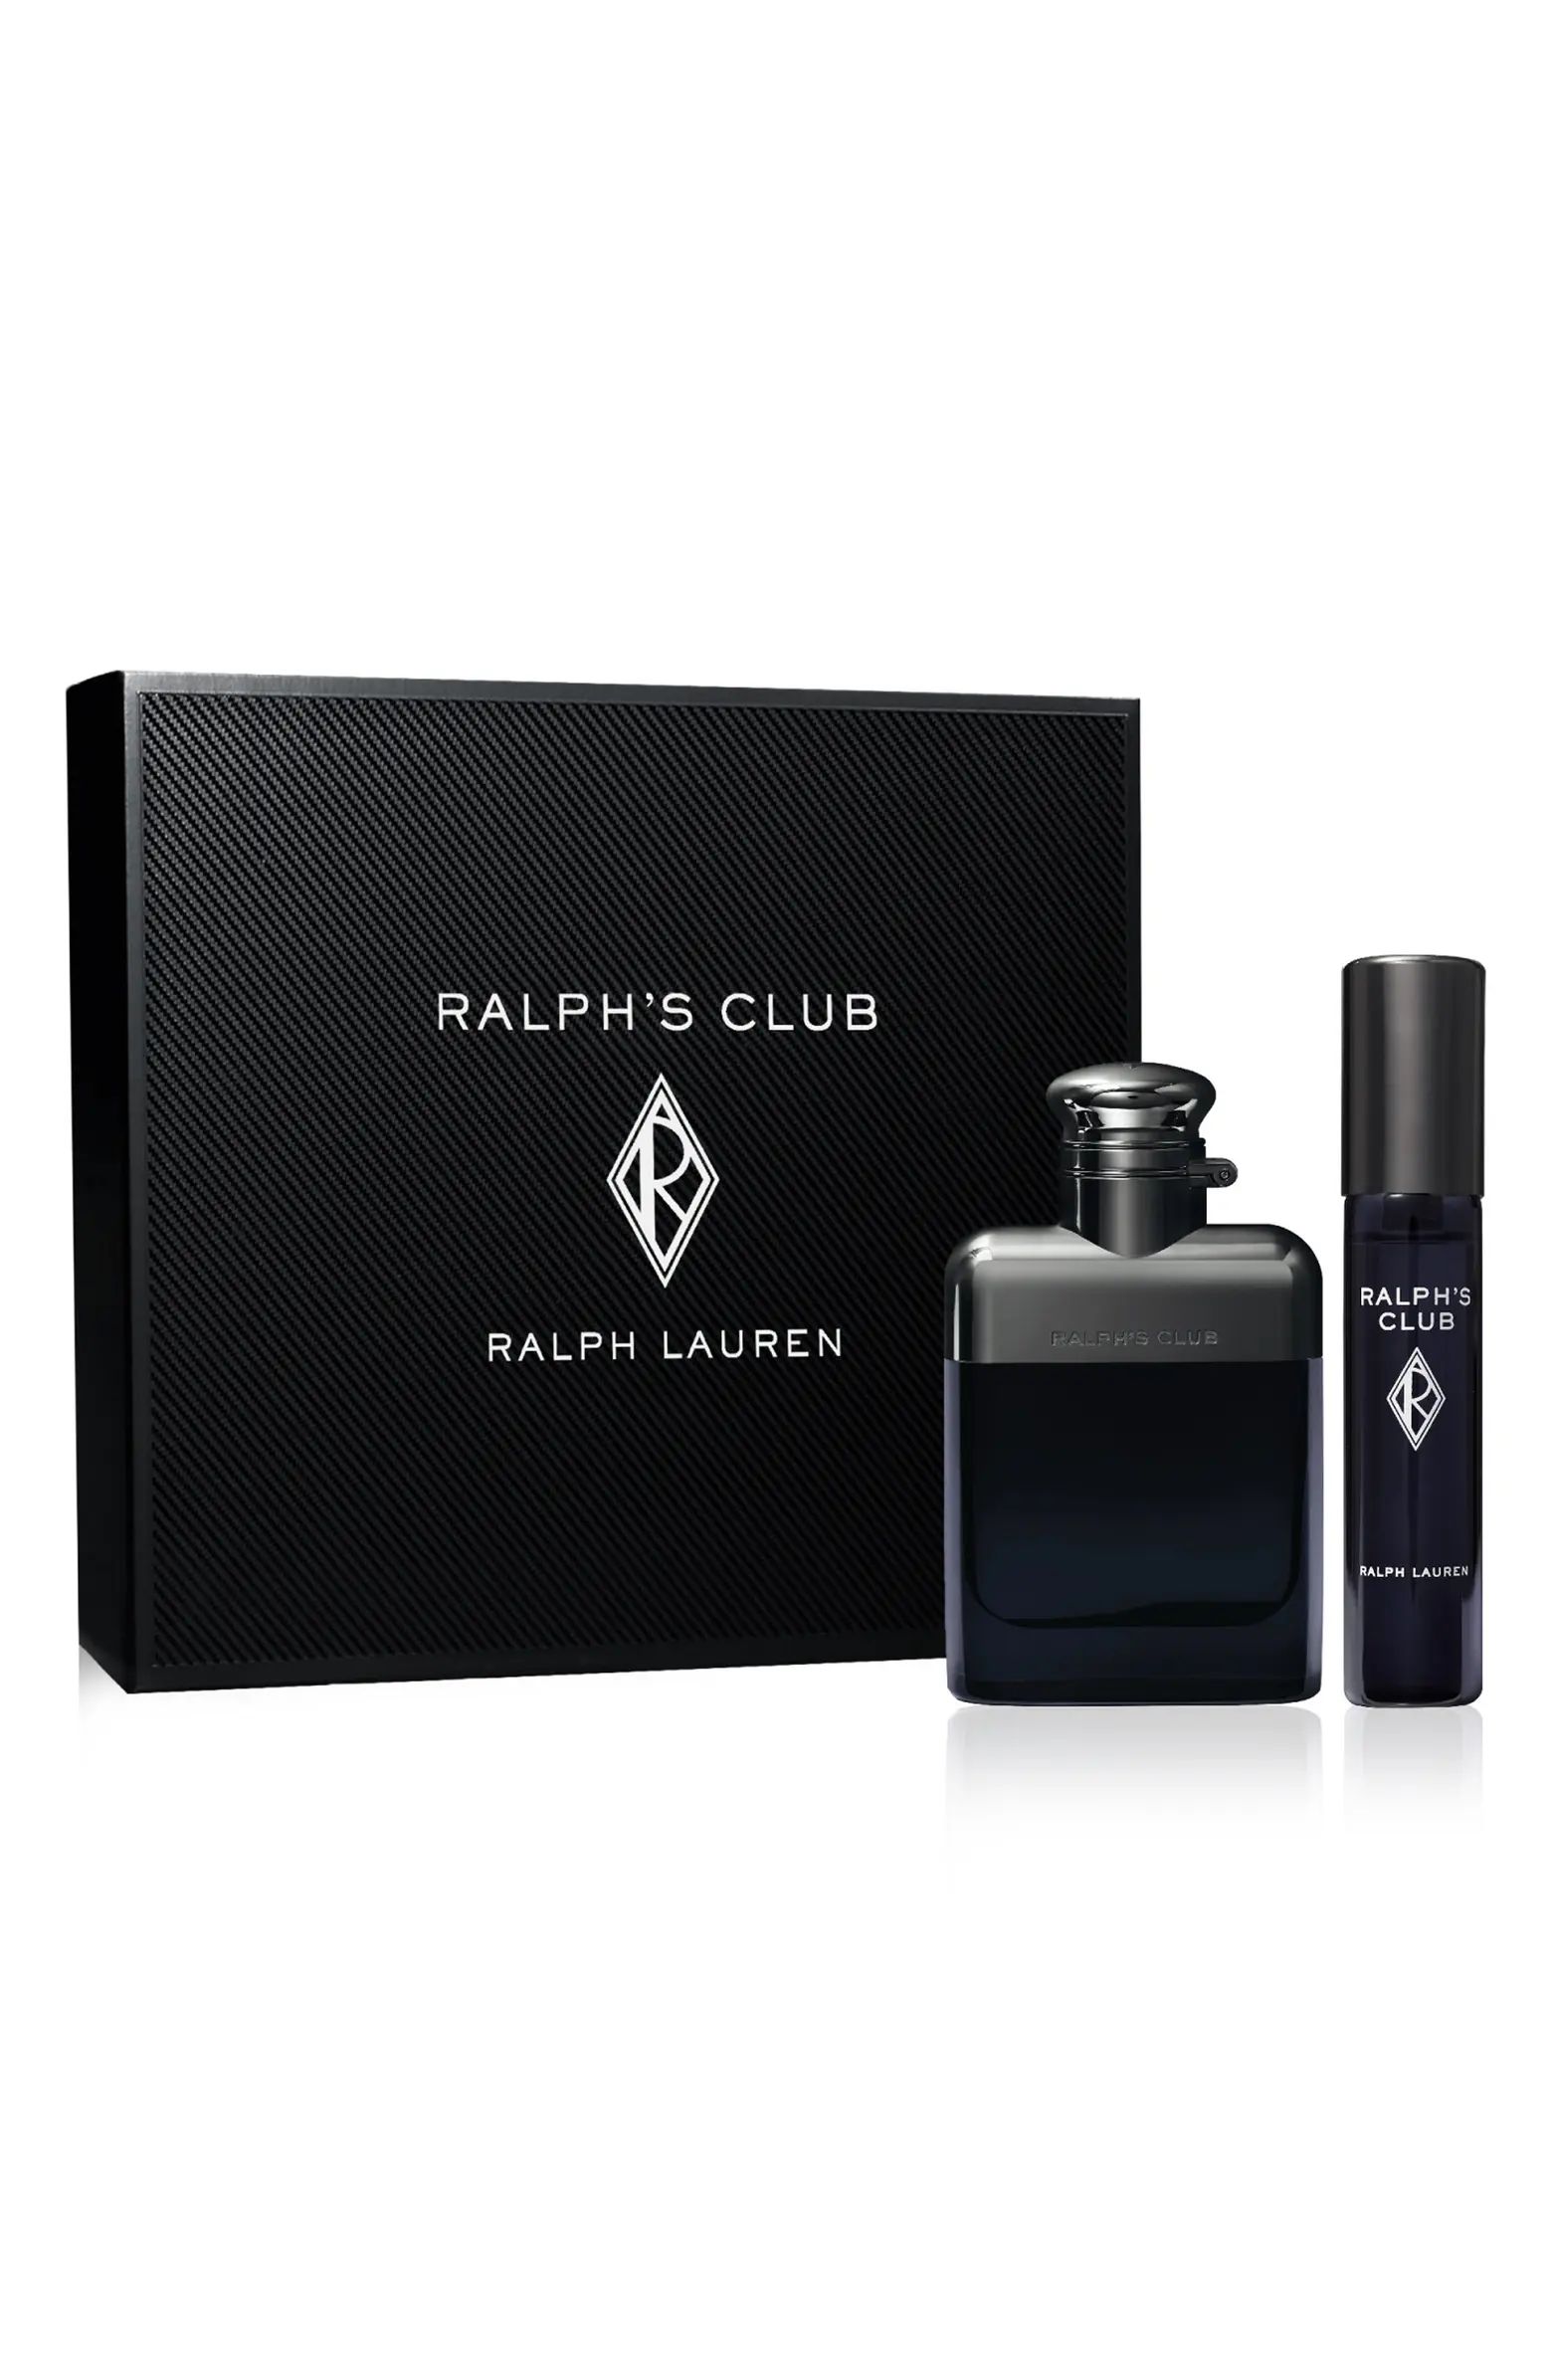 Polo Ralph Lauren Ralph Lauren Ralph's Club Eau de Parfum Set USD $112 Value | Nordstrom | Nordstrom